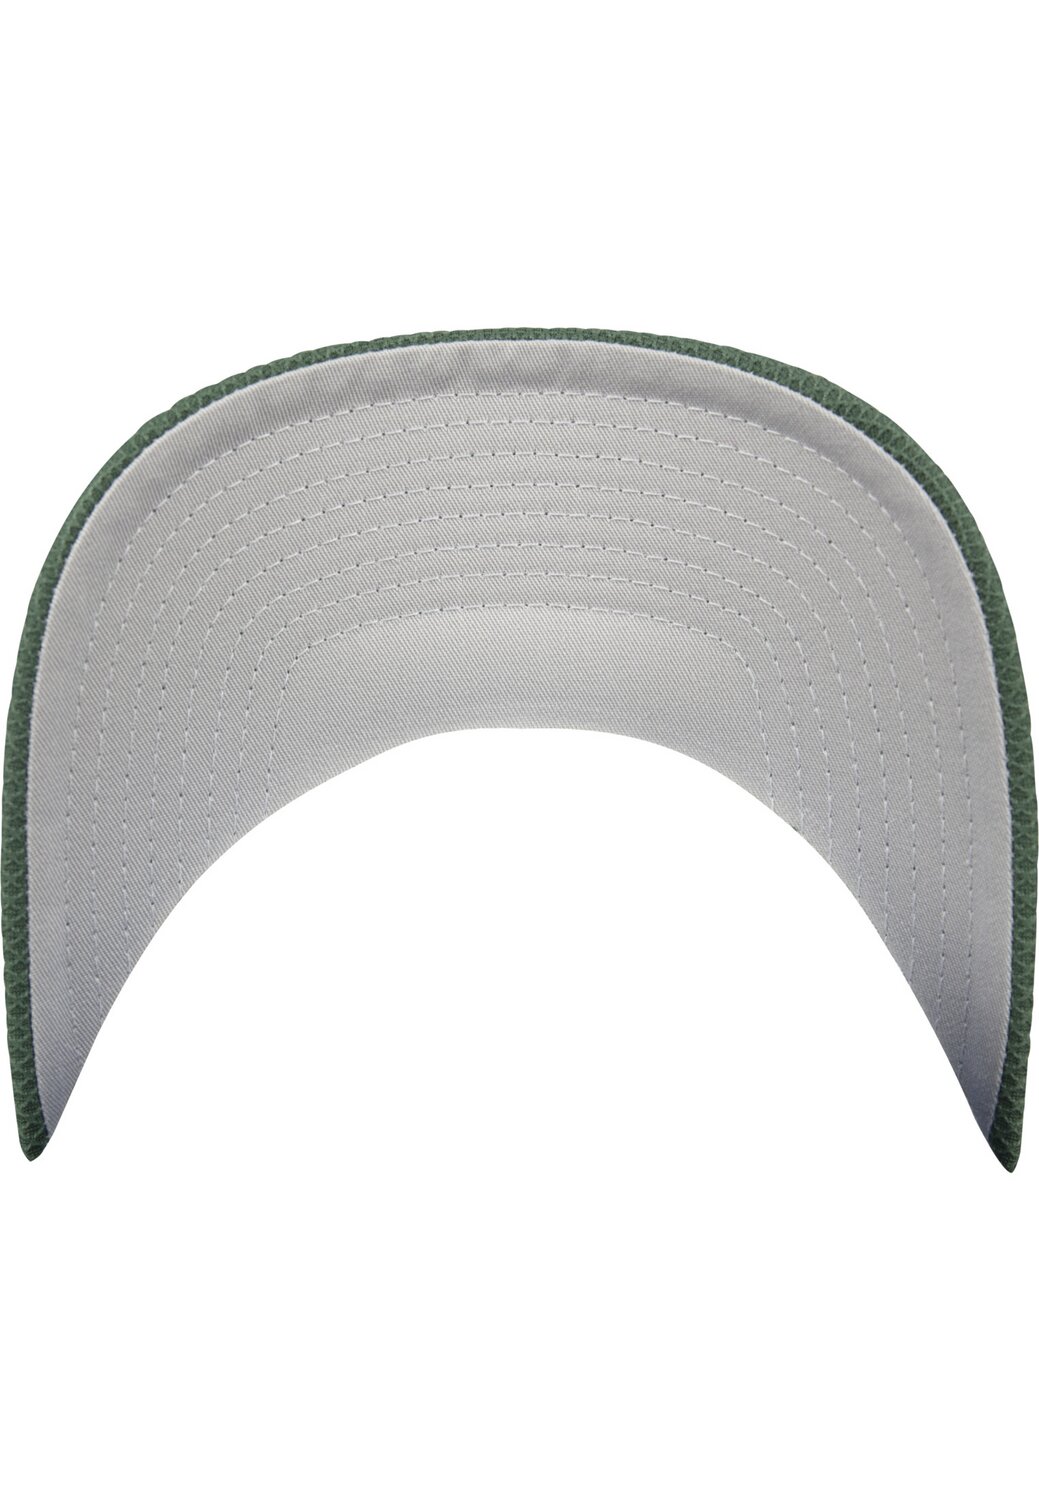 Baseball Cap 110 green Flexfit | Hybrid MAXISCOOT